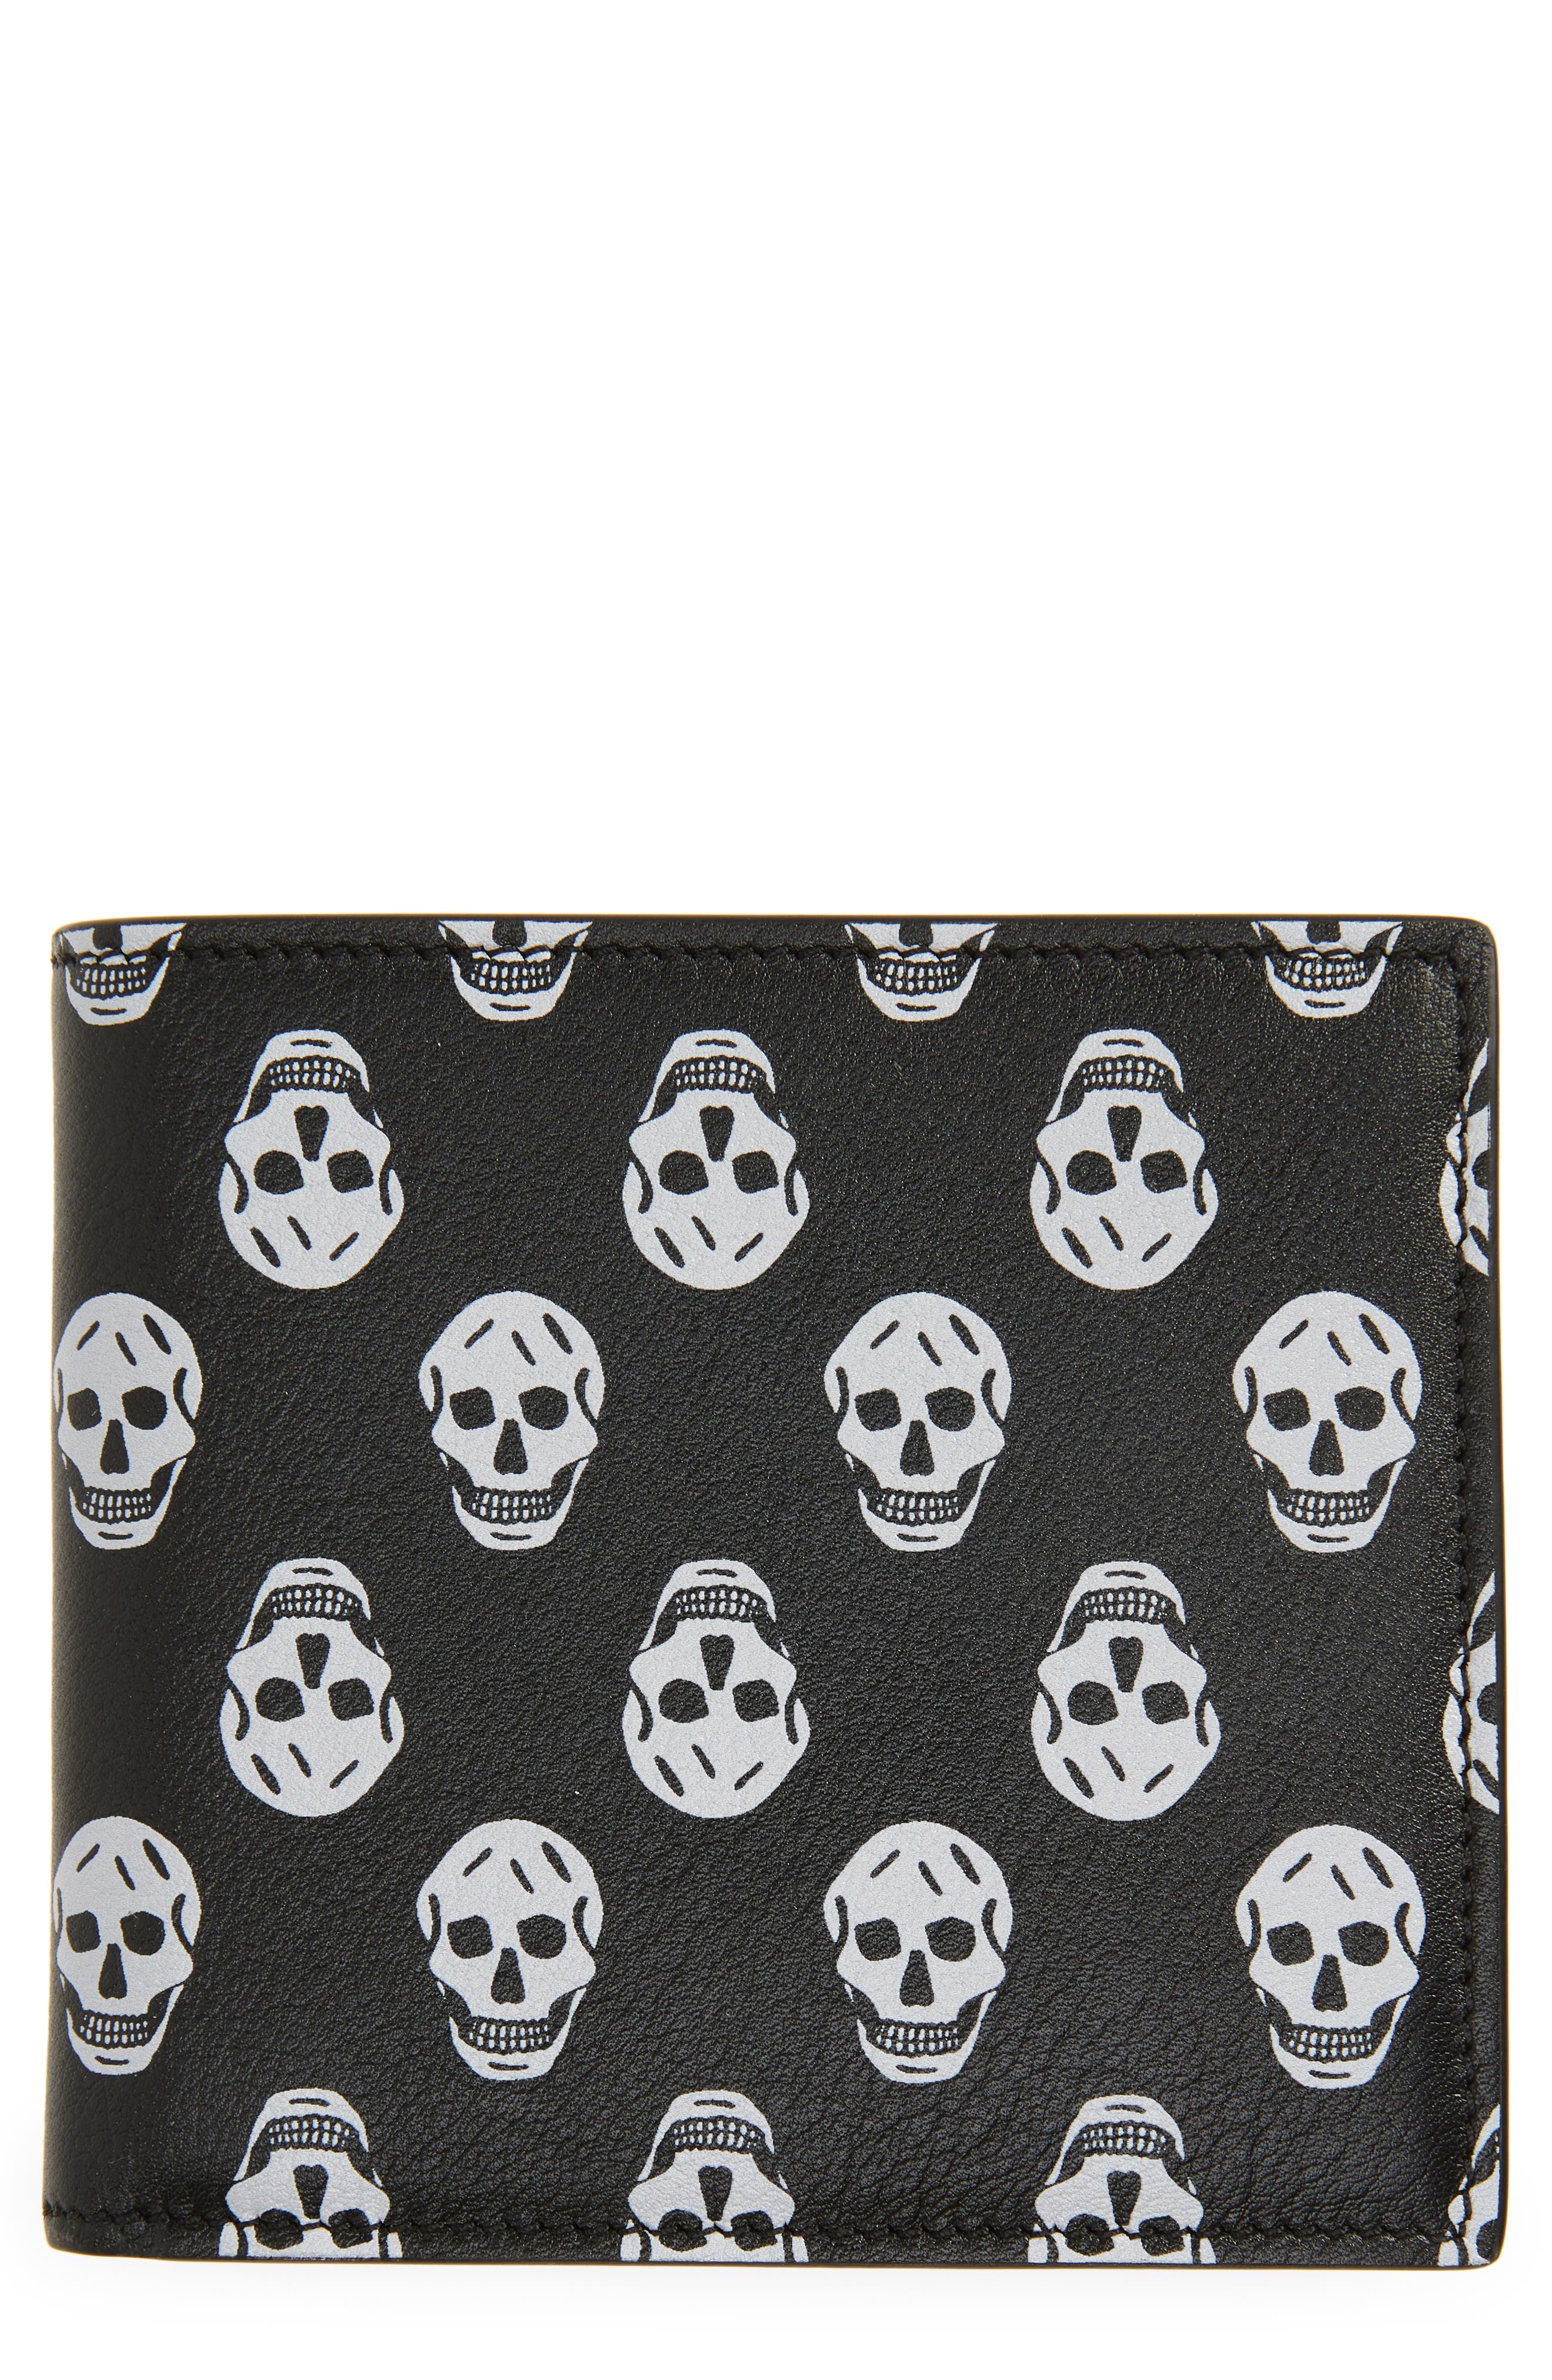 Alexander McQueen Skull Print Leather Wallet in Black/White at Nordstrom